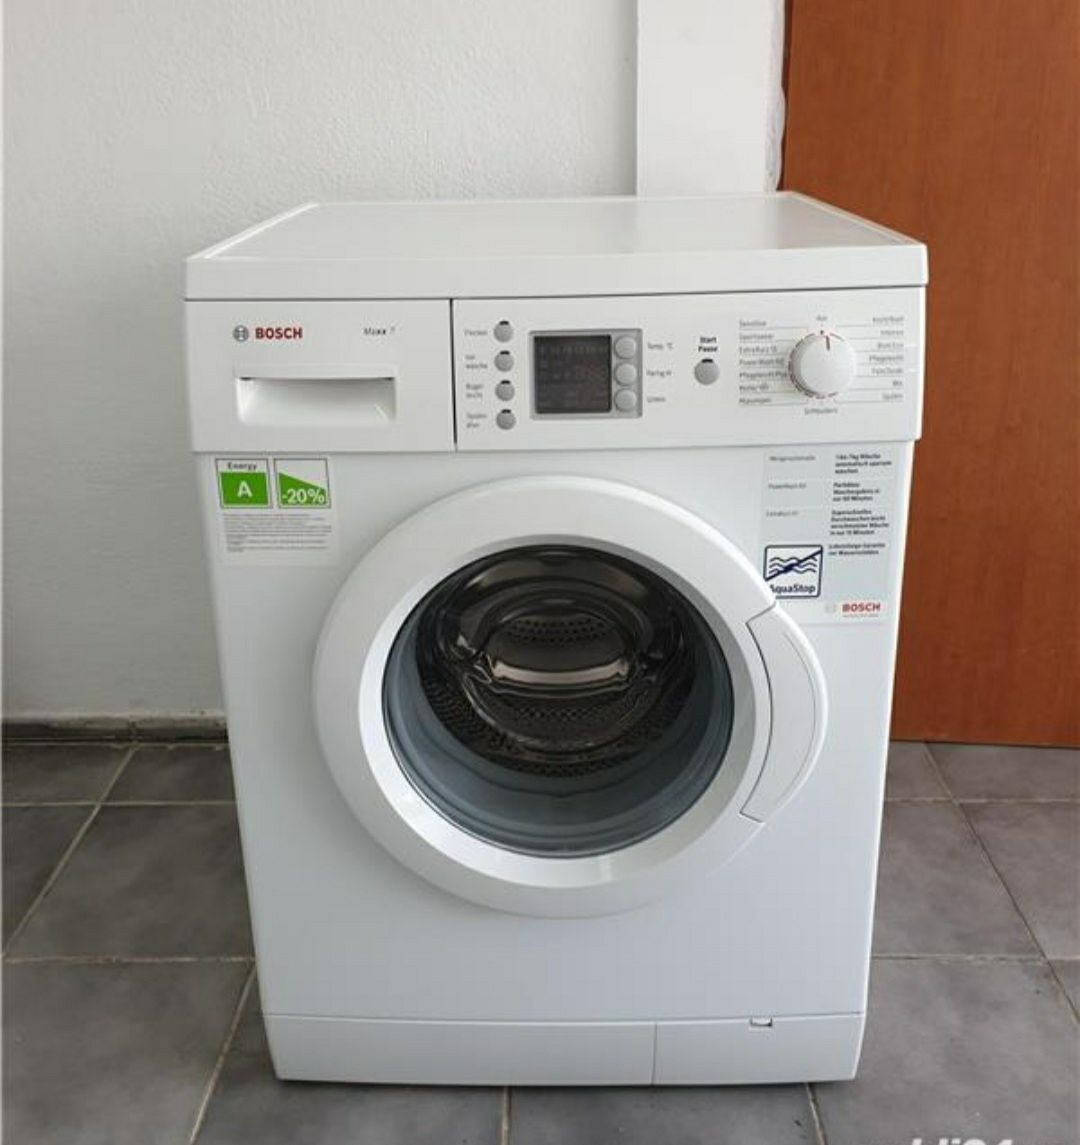 Masina de spălat rufe Bosch,  wsu 60442